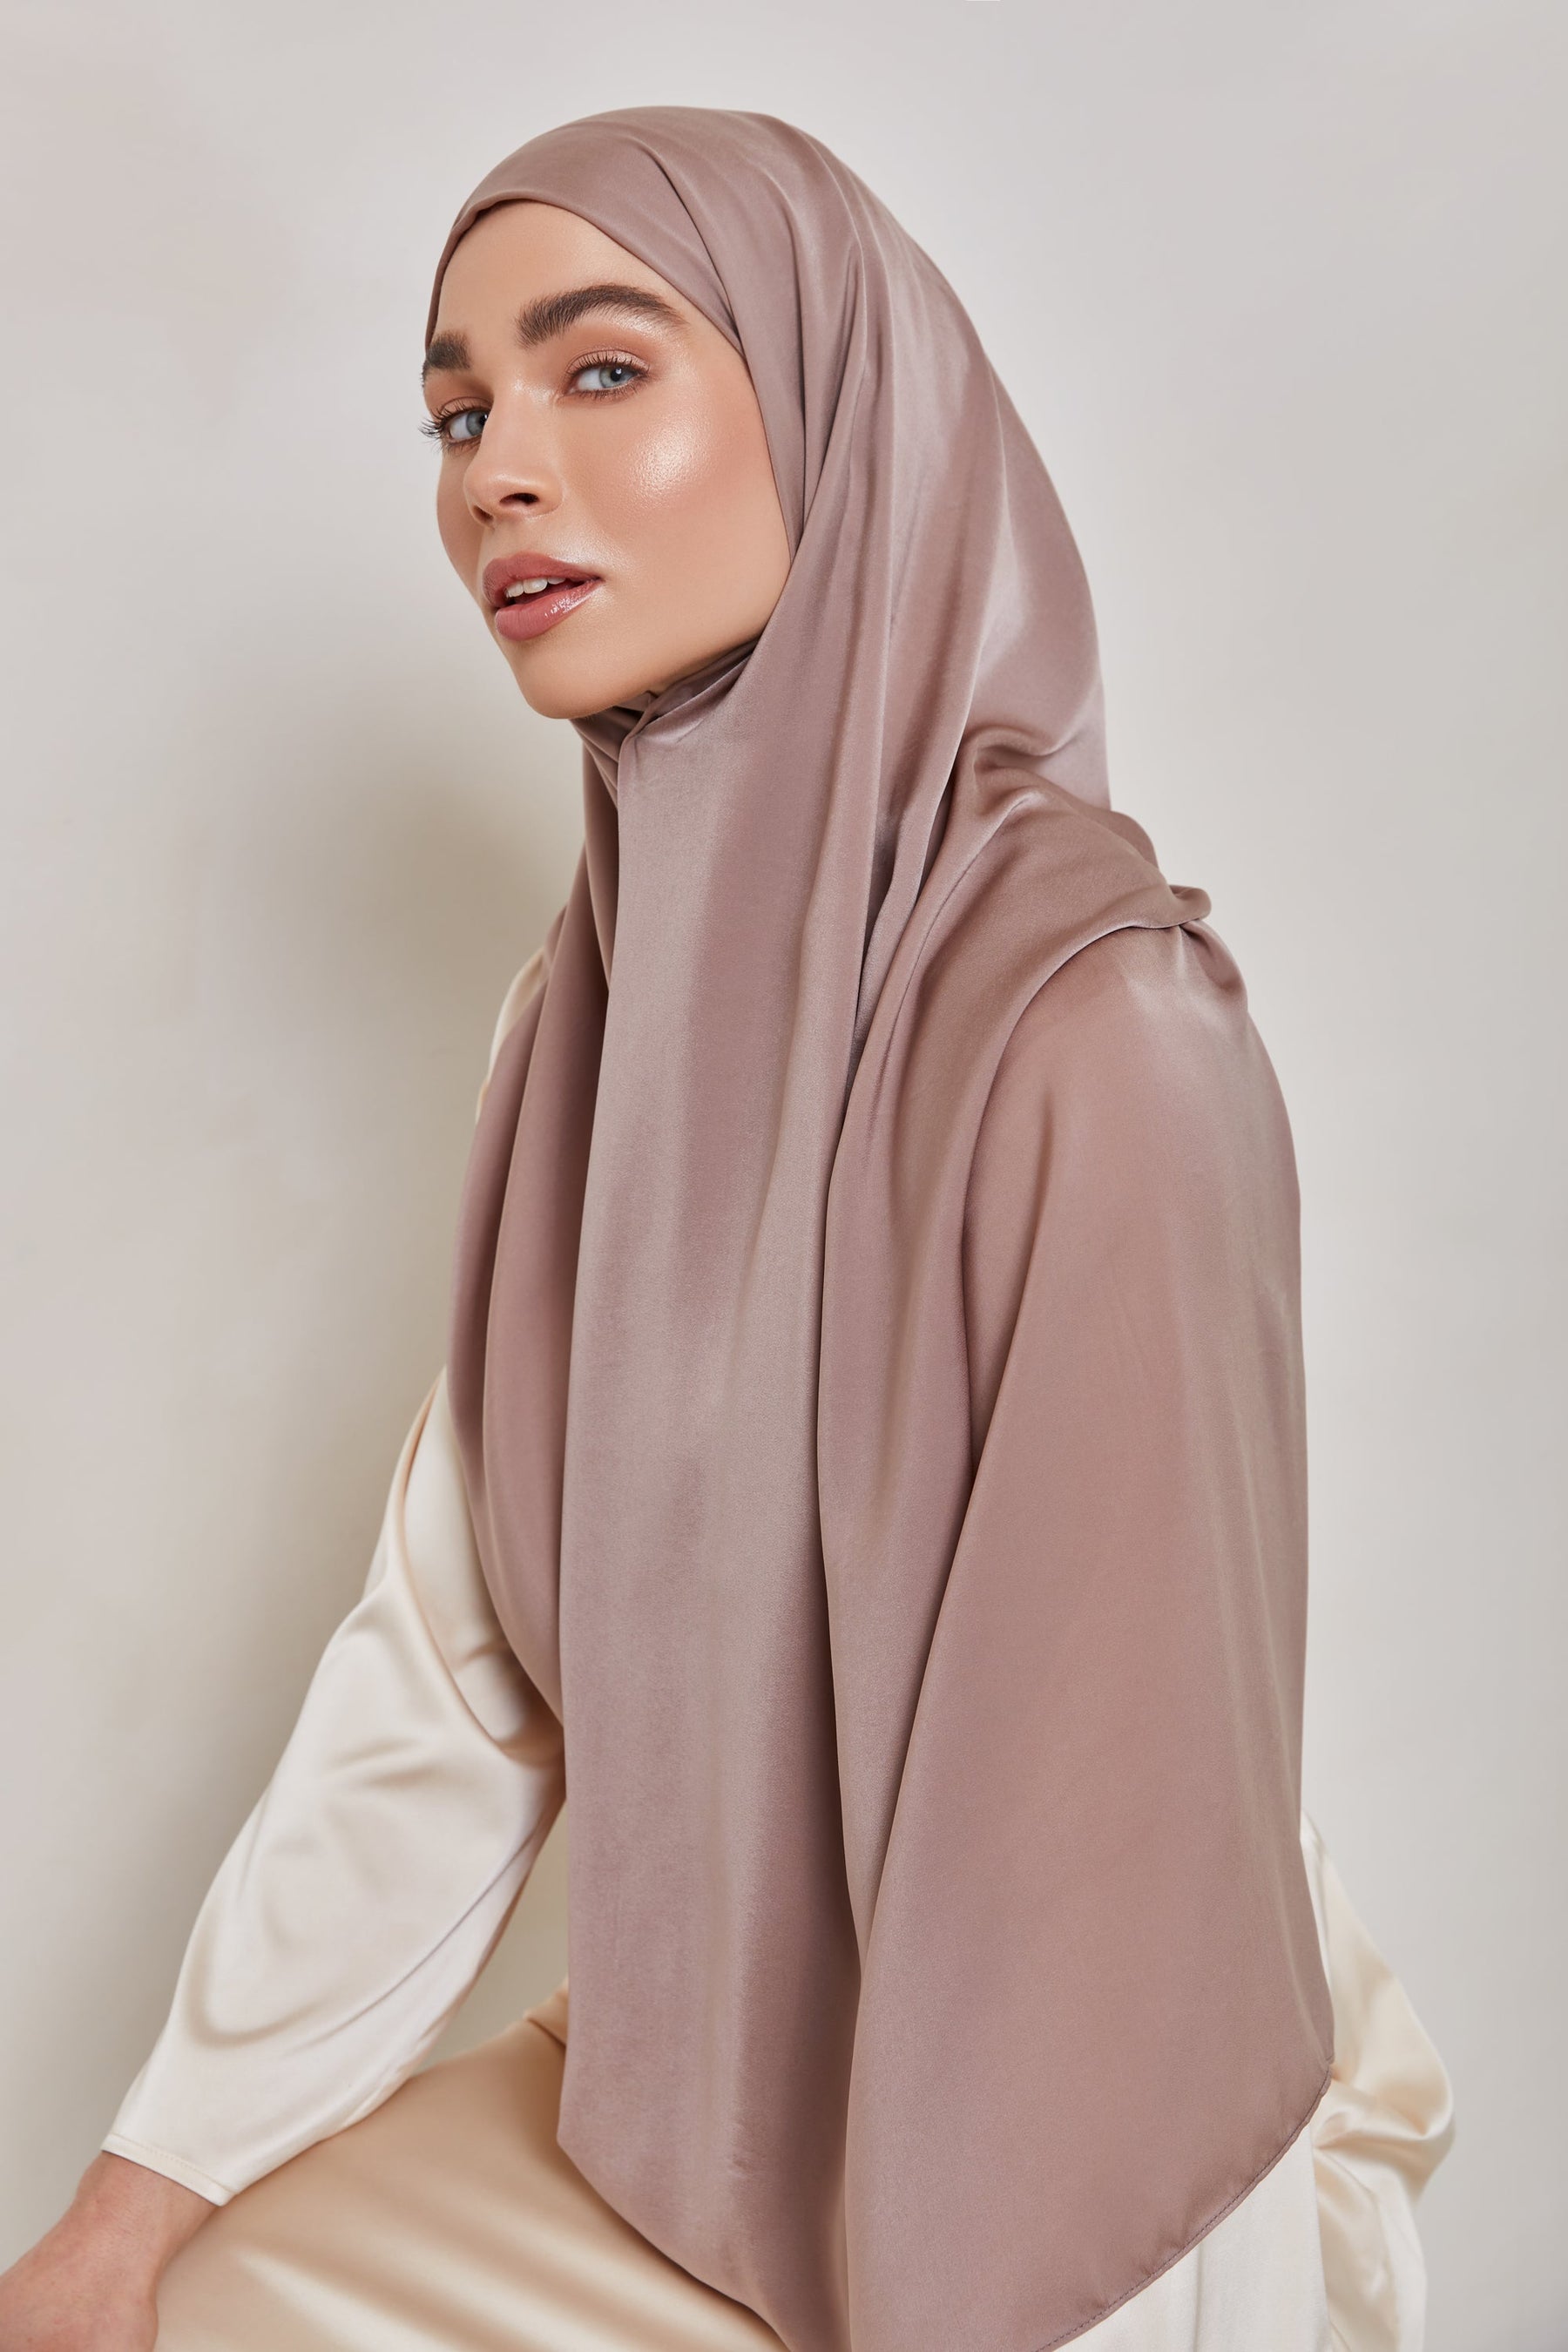 MATTE Satin Hijab - Too Taupe Veiled Collection 